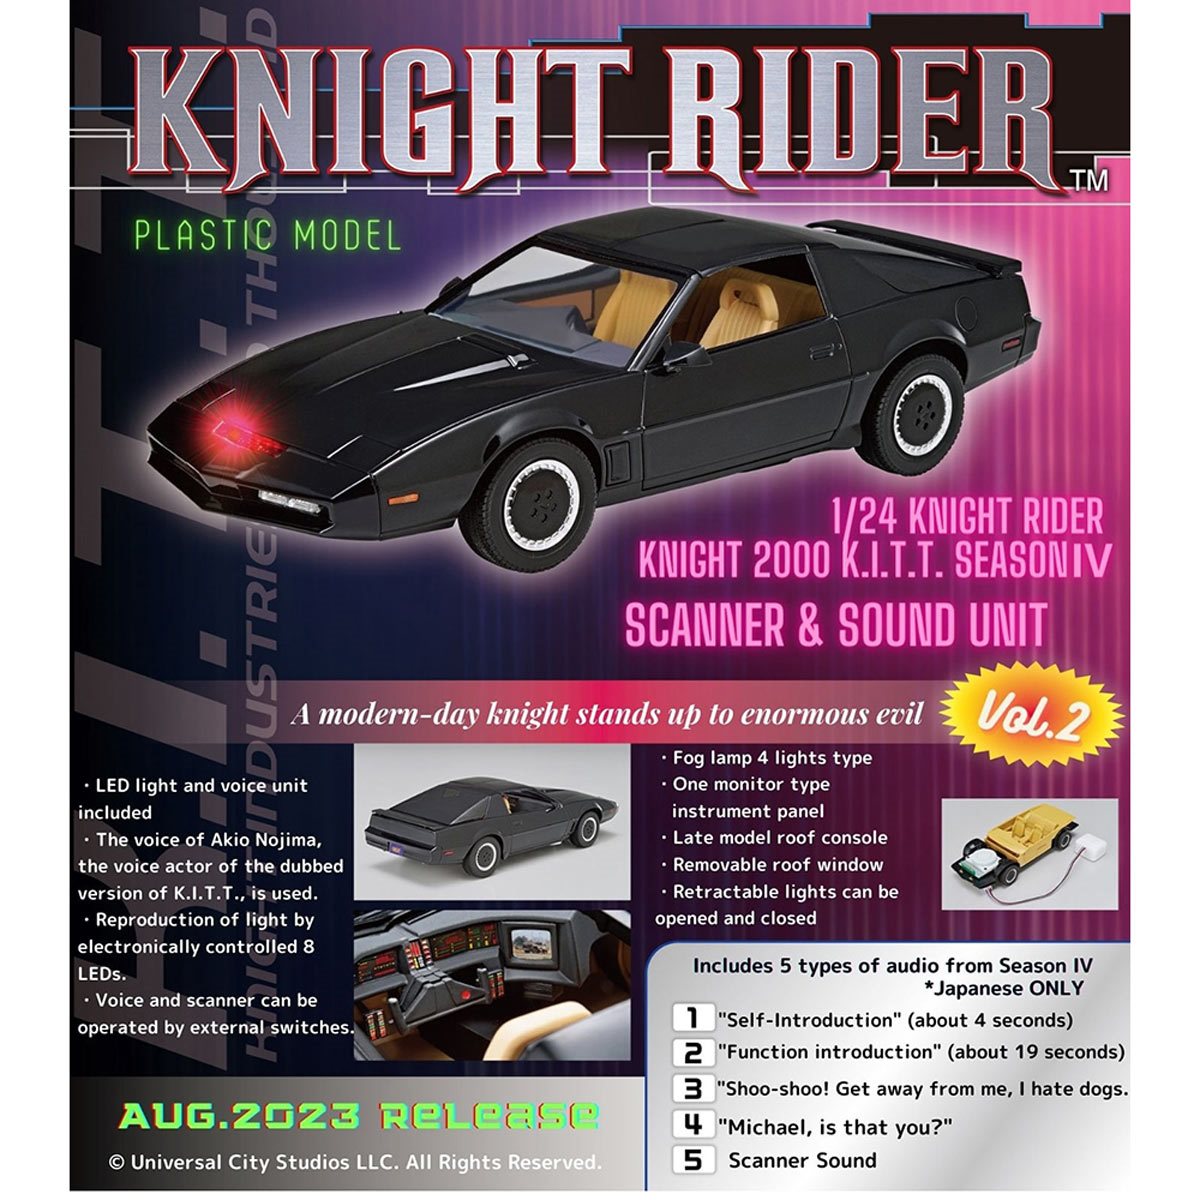 Knight Rider K.I.T.T. S4 Scanner & Sound Unit 1:24 Model